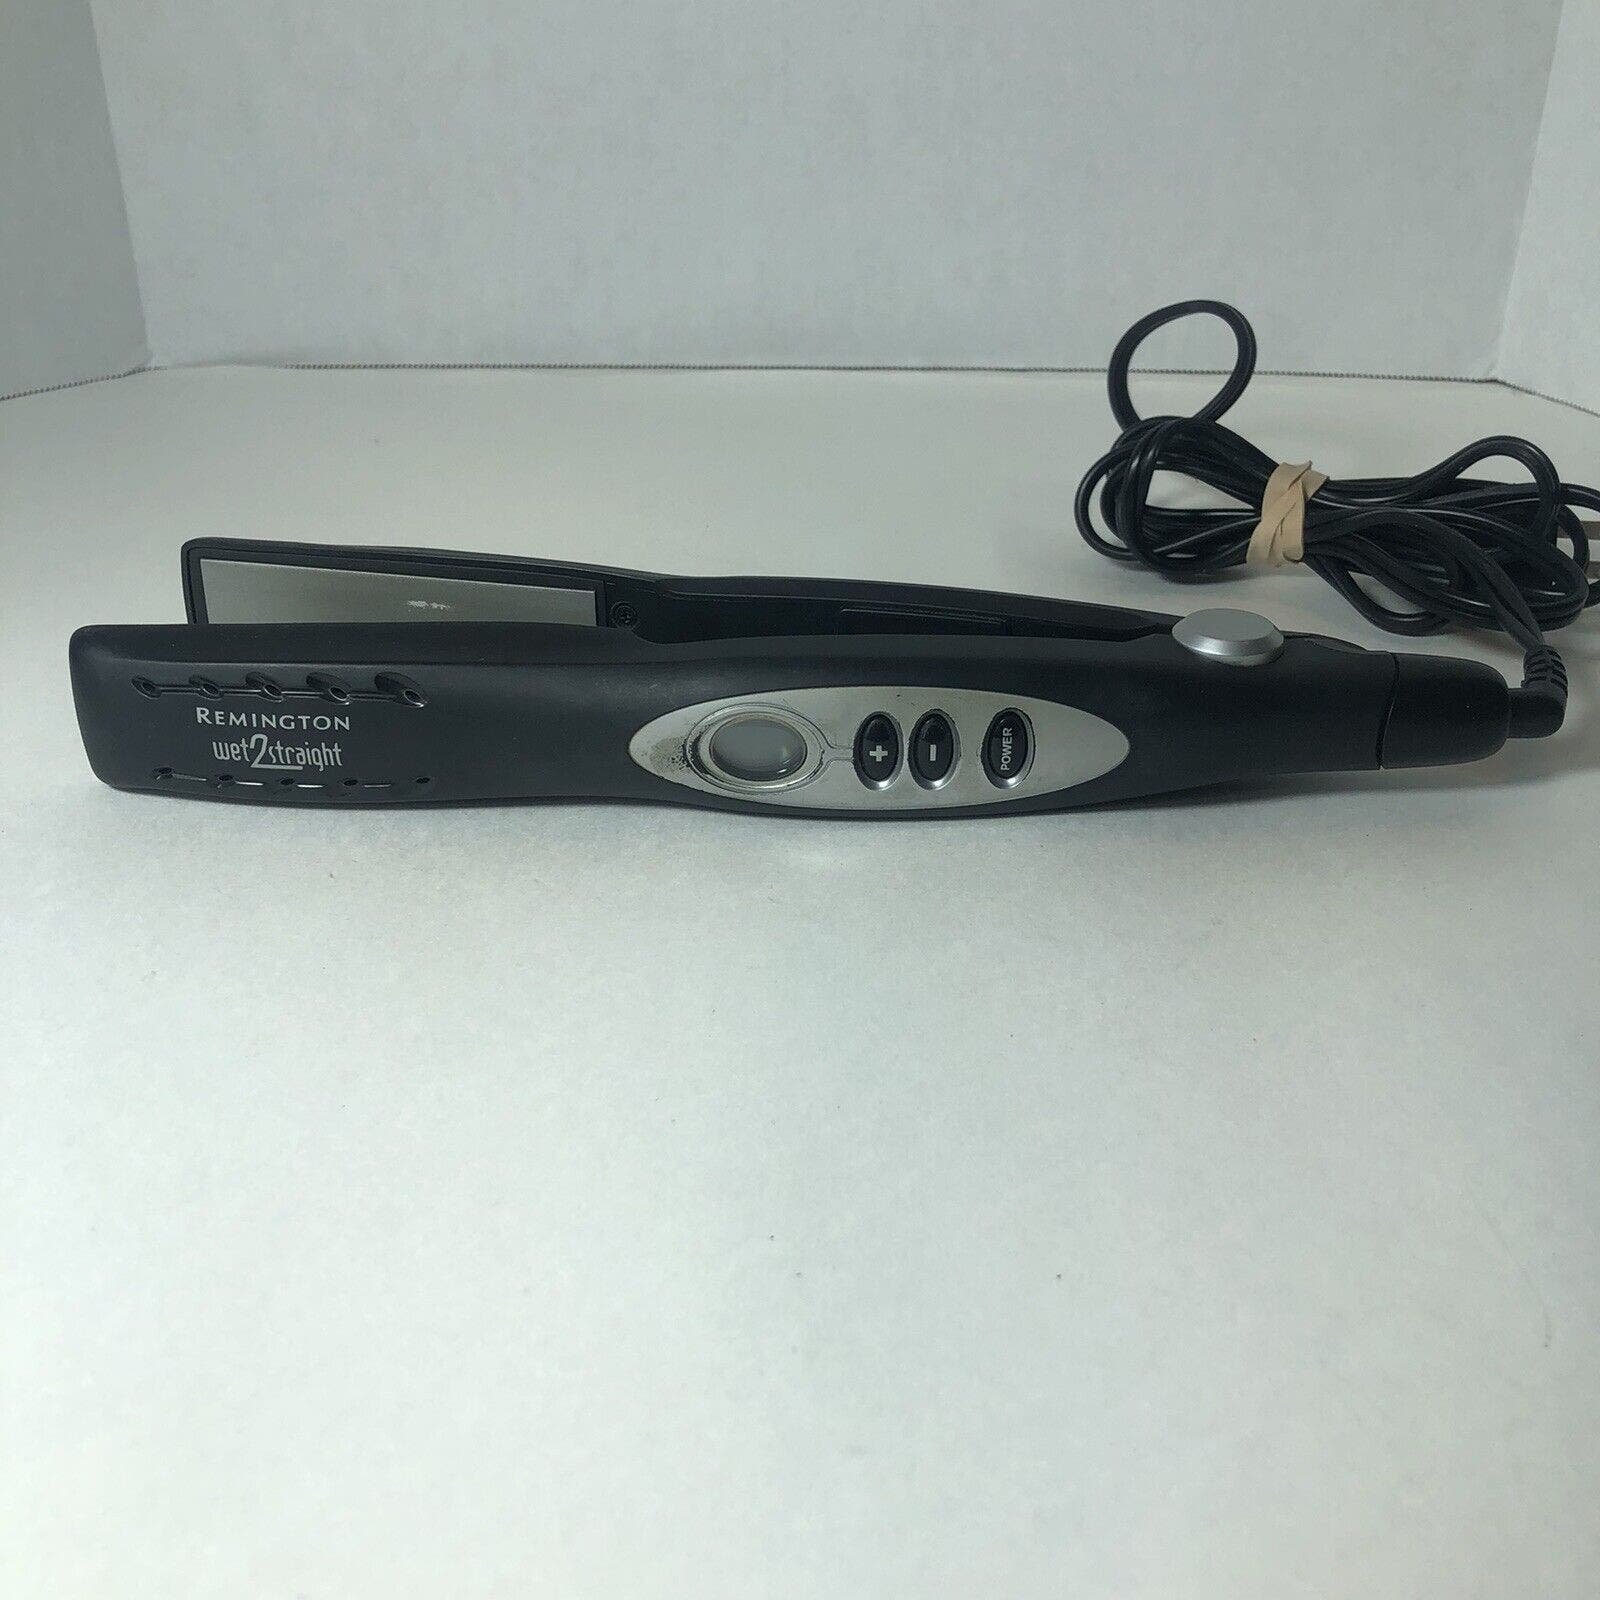 Remington Hair Straightener Wet 2 Straight 1” Flat Iron